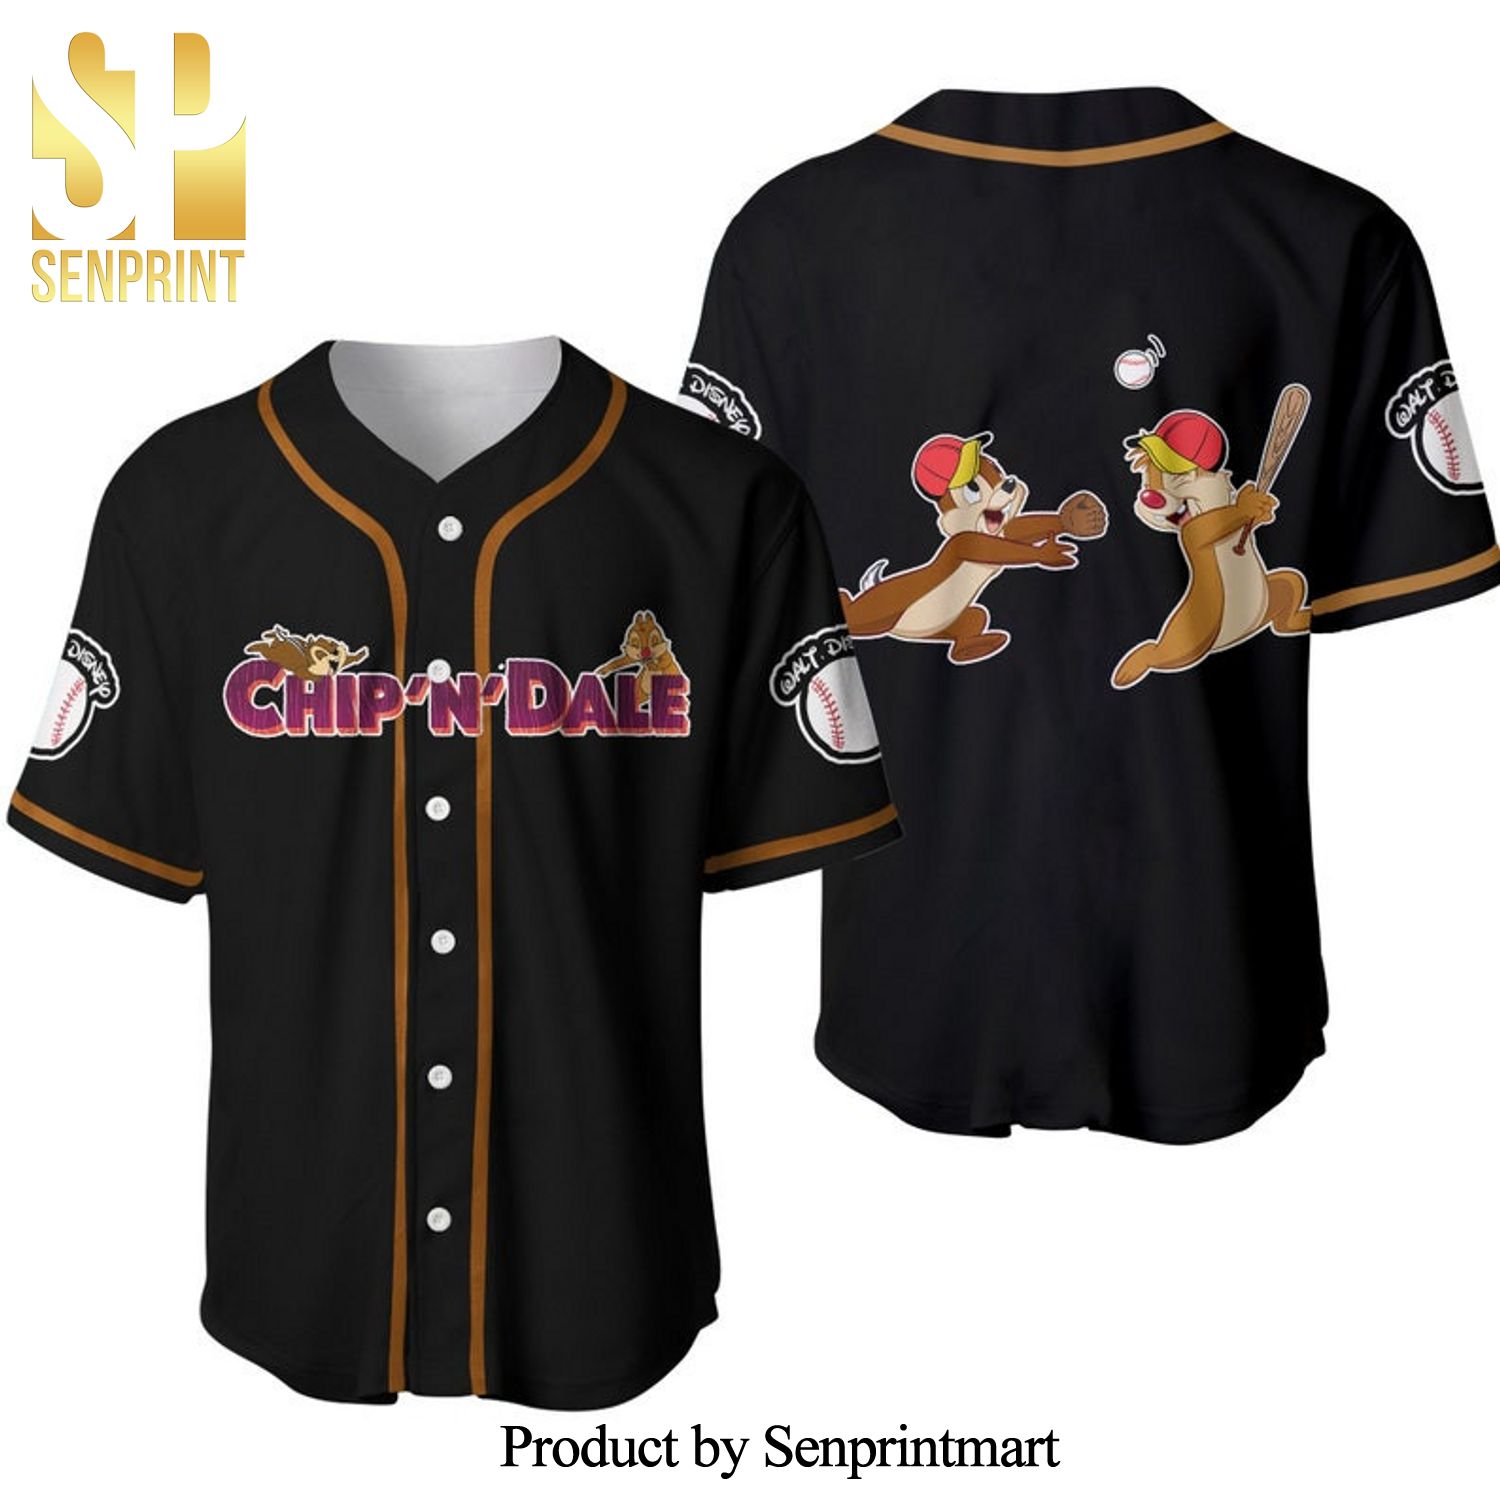 Chip & Dale Chipmunks Disney Cartoon Graphics All Over Print Unisex Baseball Jersey – Black